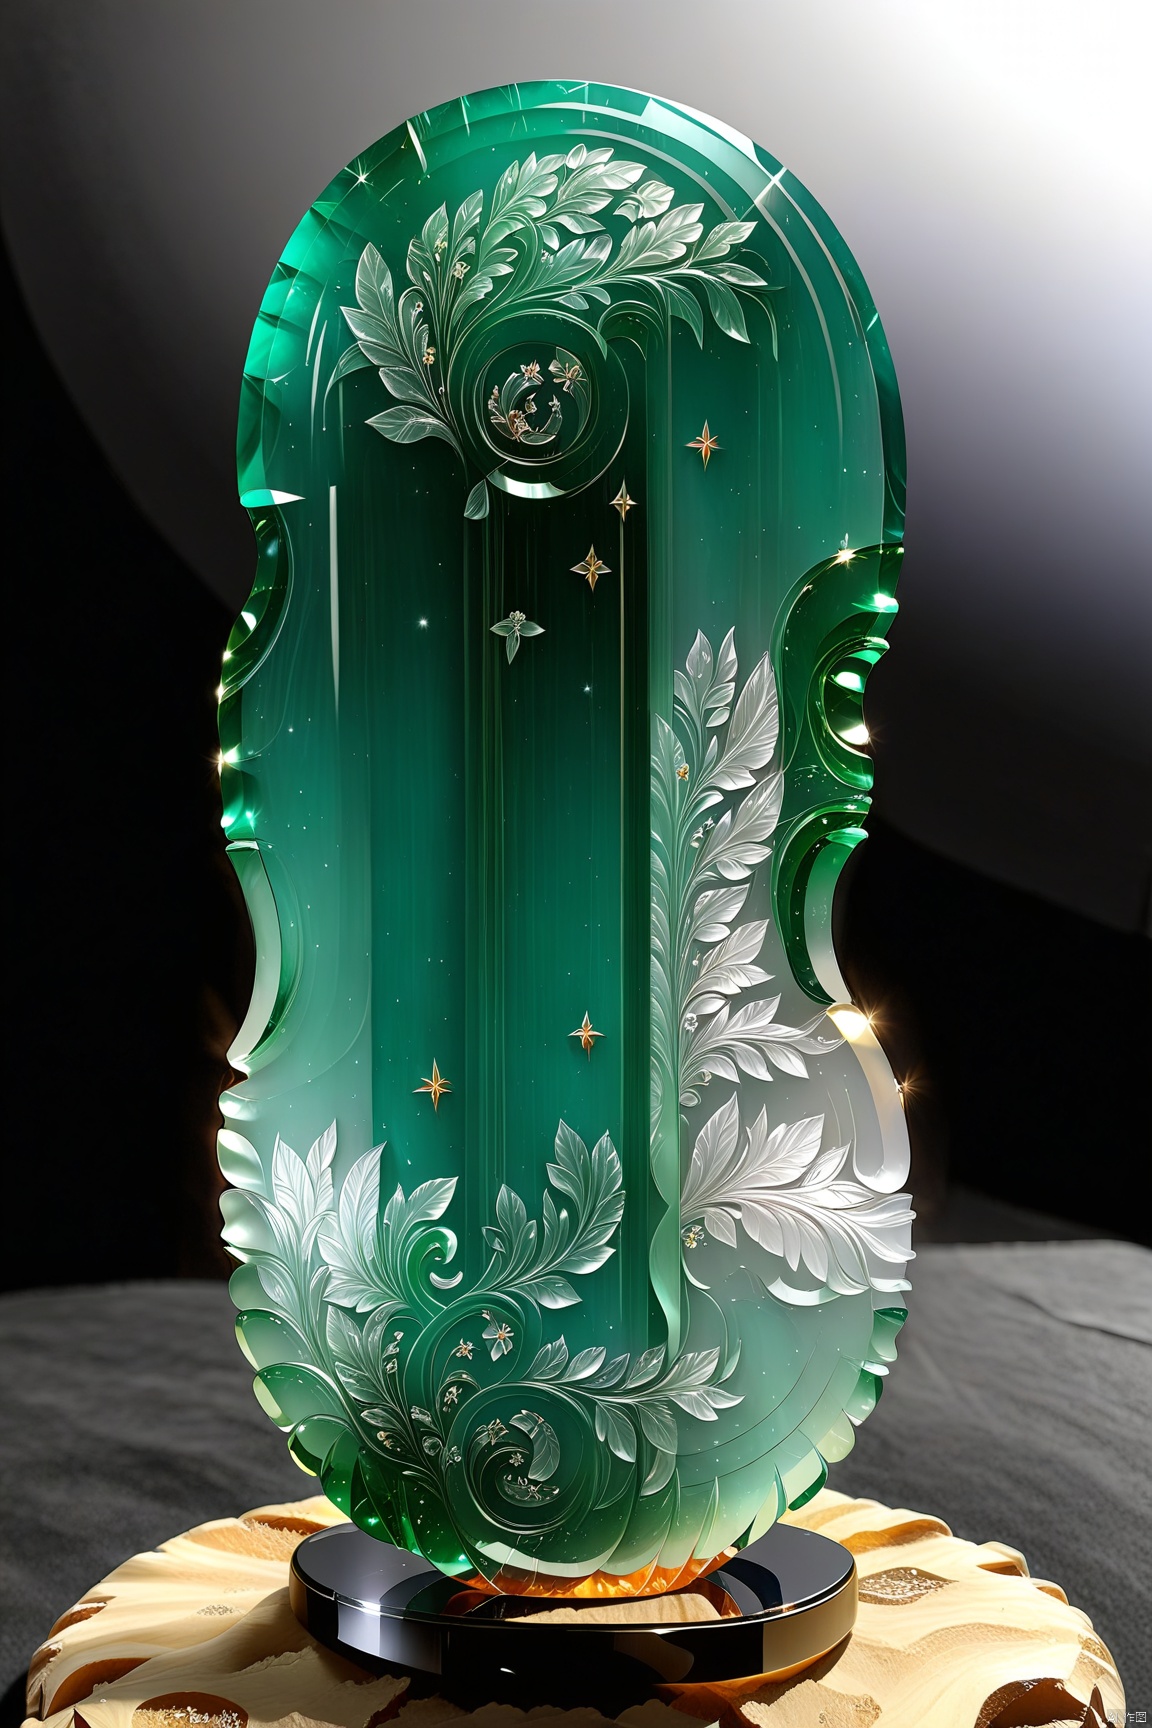 Penis, carving, very transparent and beautiful, emerald material,(penis:1.5)